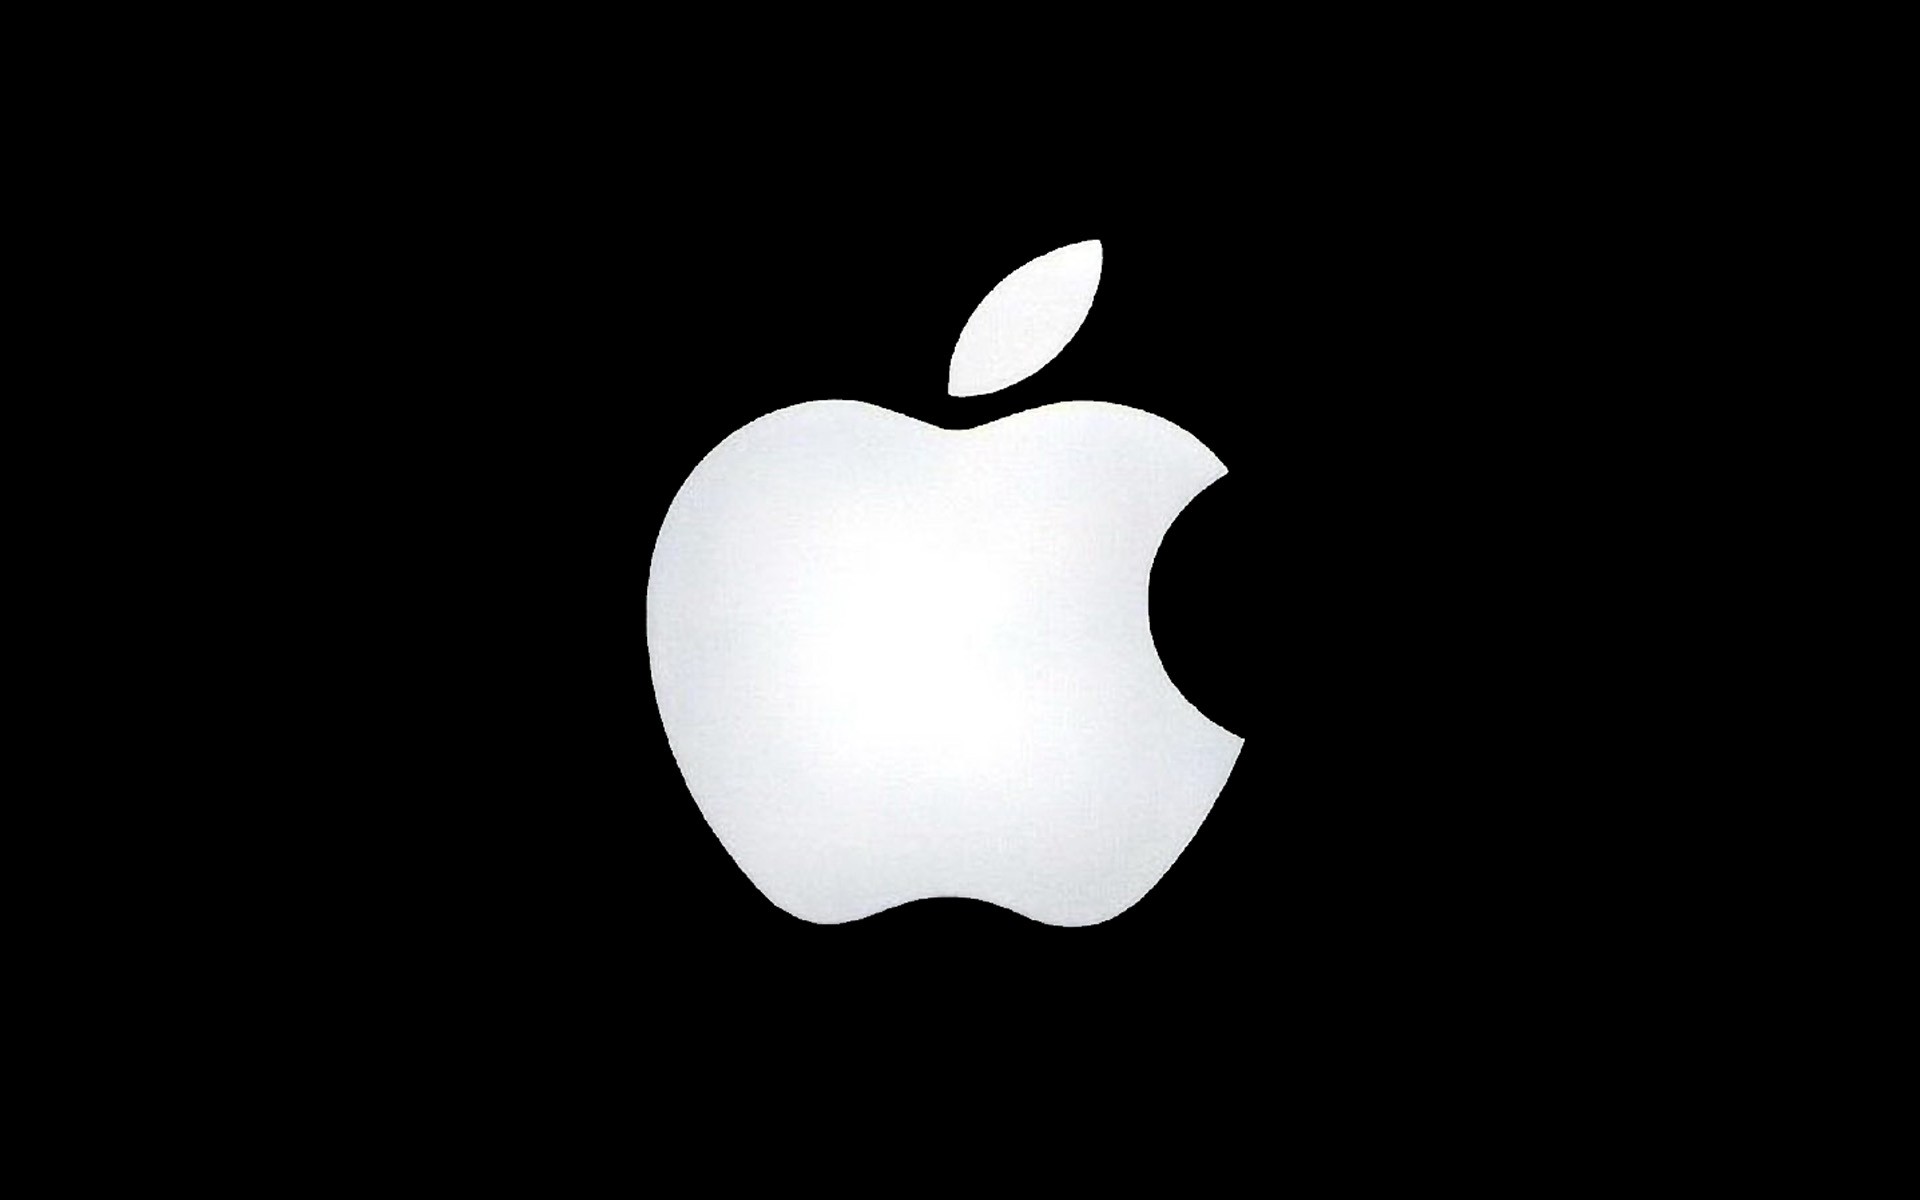 apple logo black and white Image Wallpaper